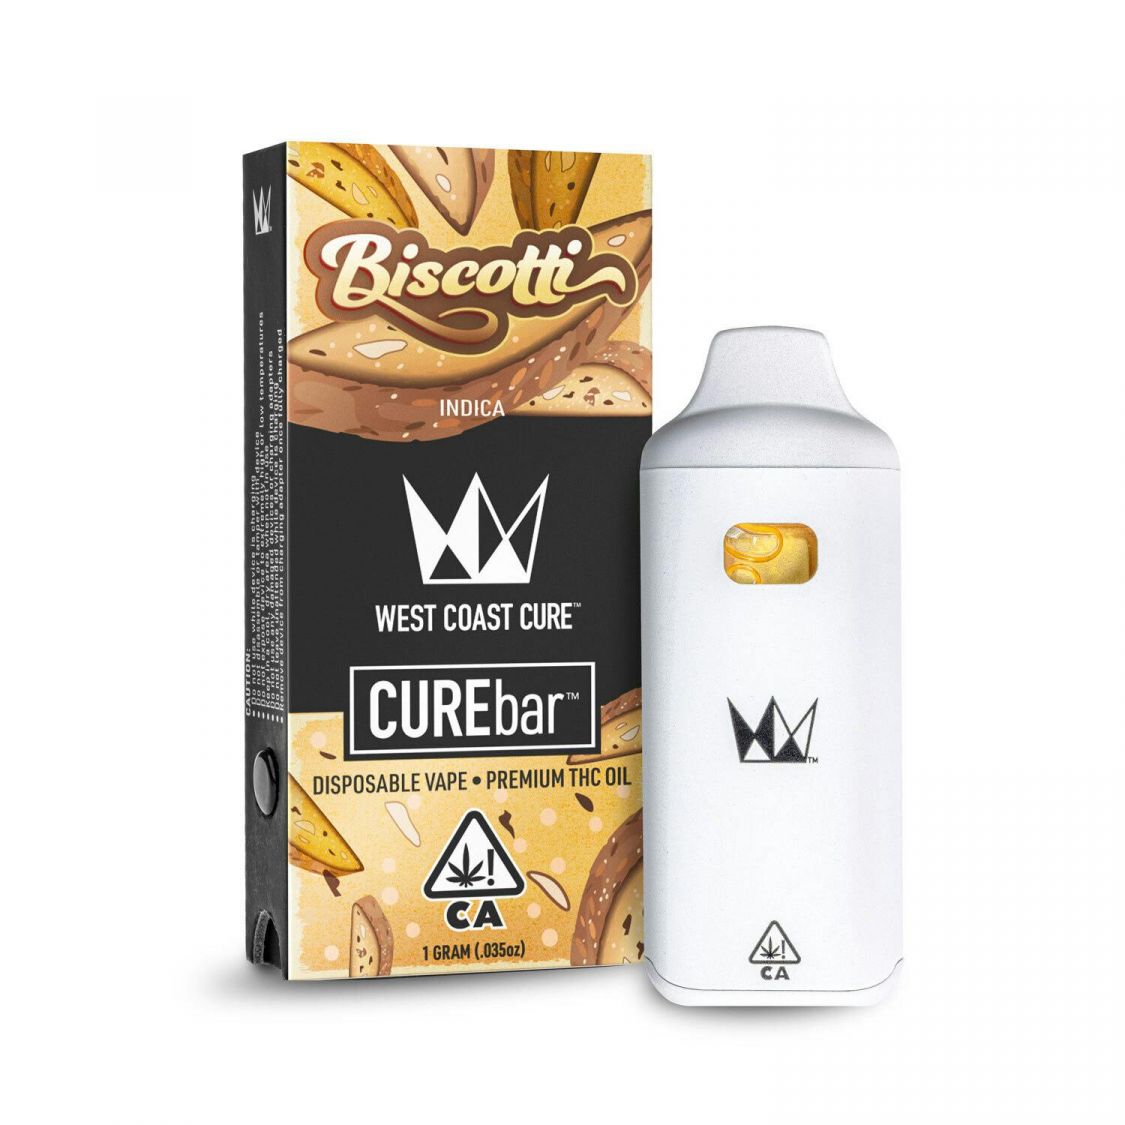 West Coast Cure Biscotti CUREbar Disposable Vaporizers Disposable